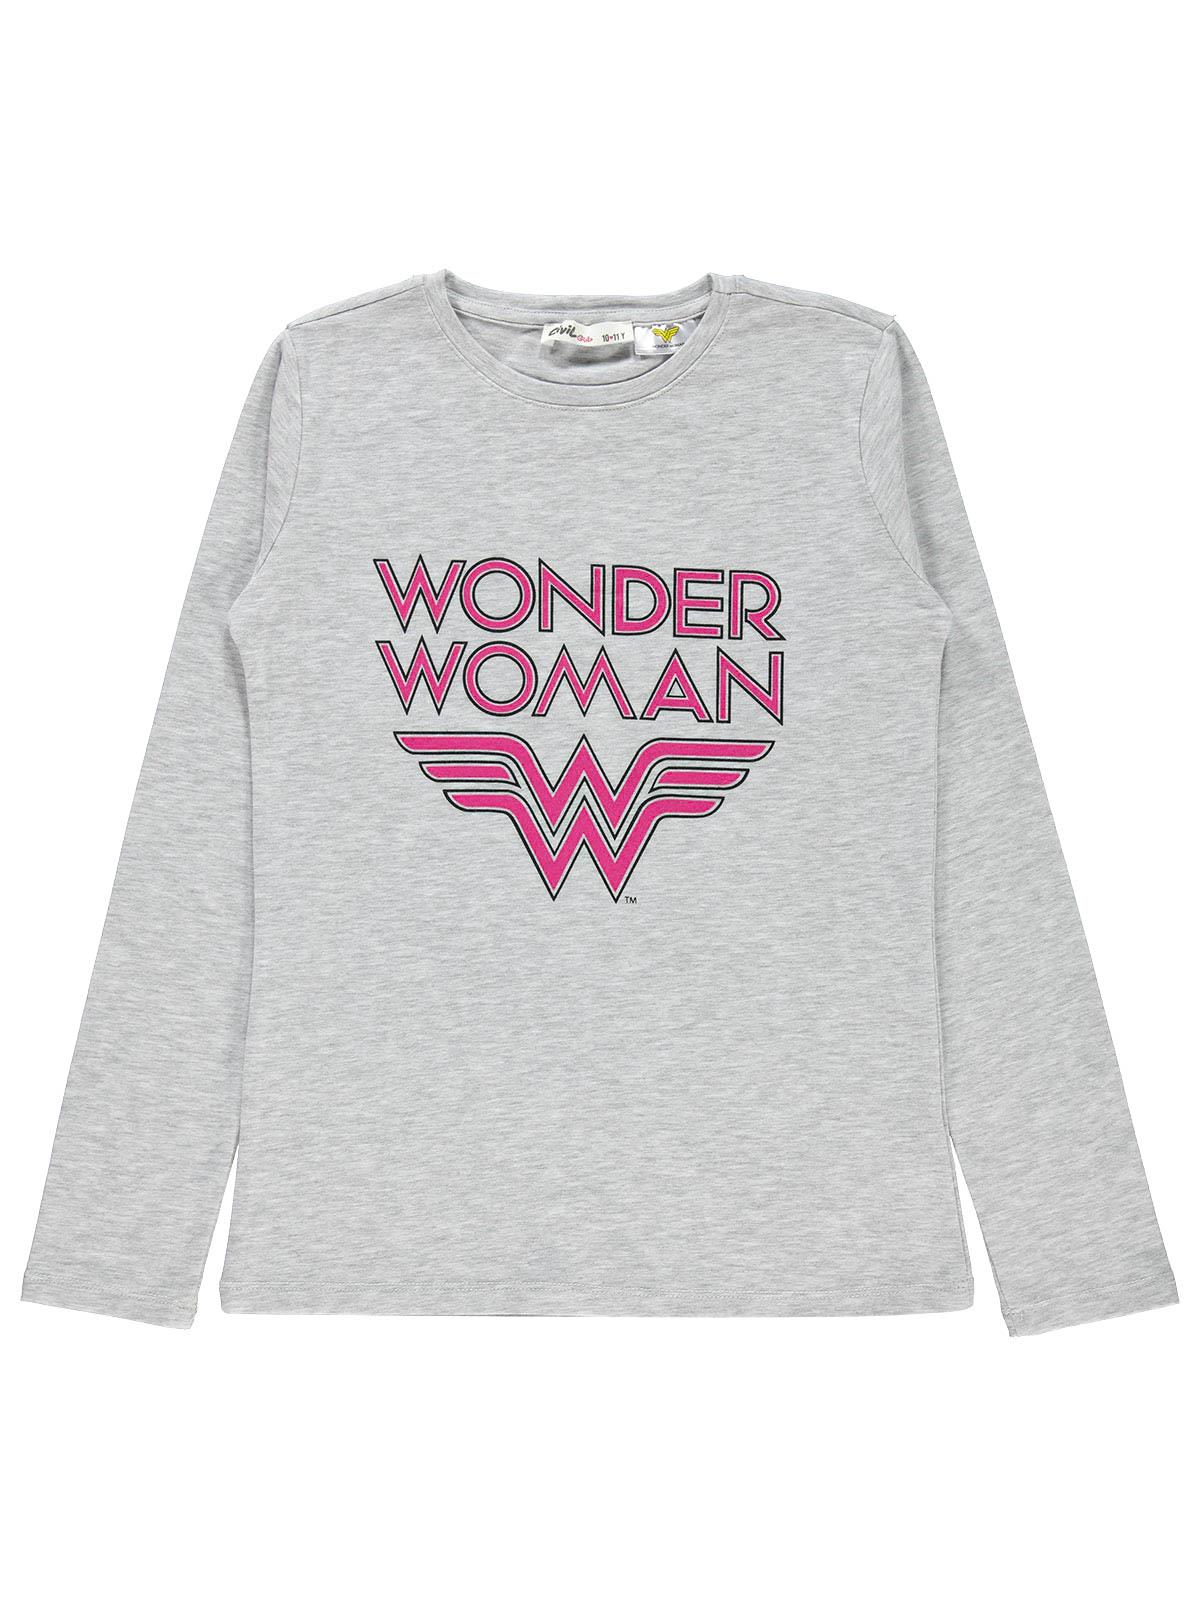 Wonder Woman Kız Çocuk Sweatshirt 10-13 Yaş Gri